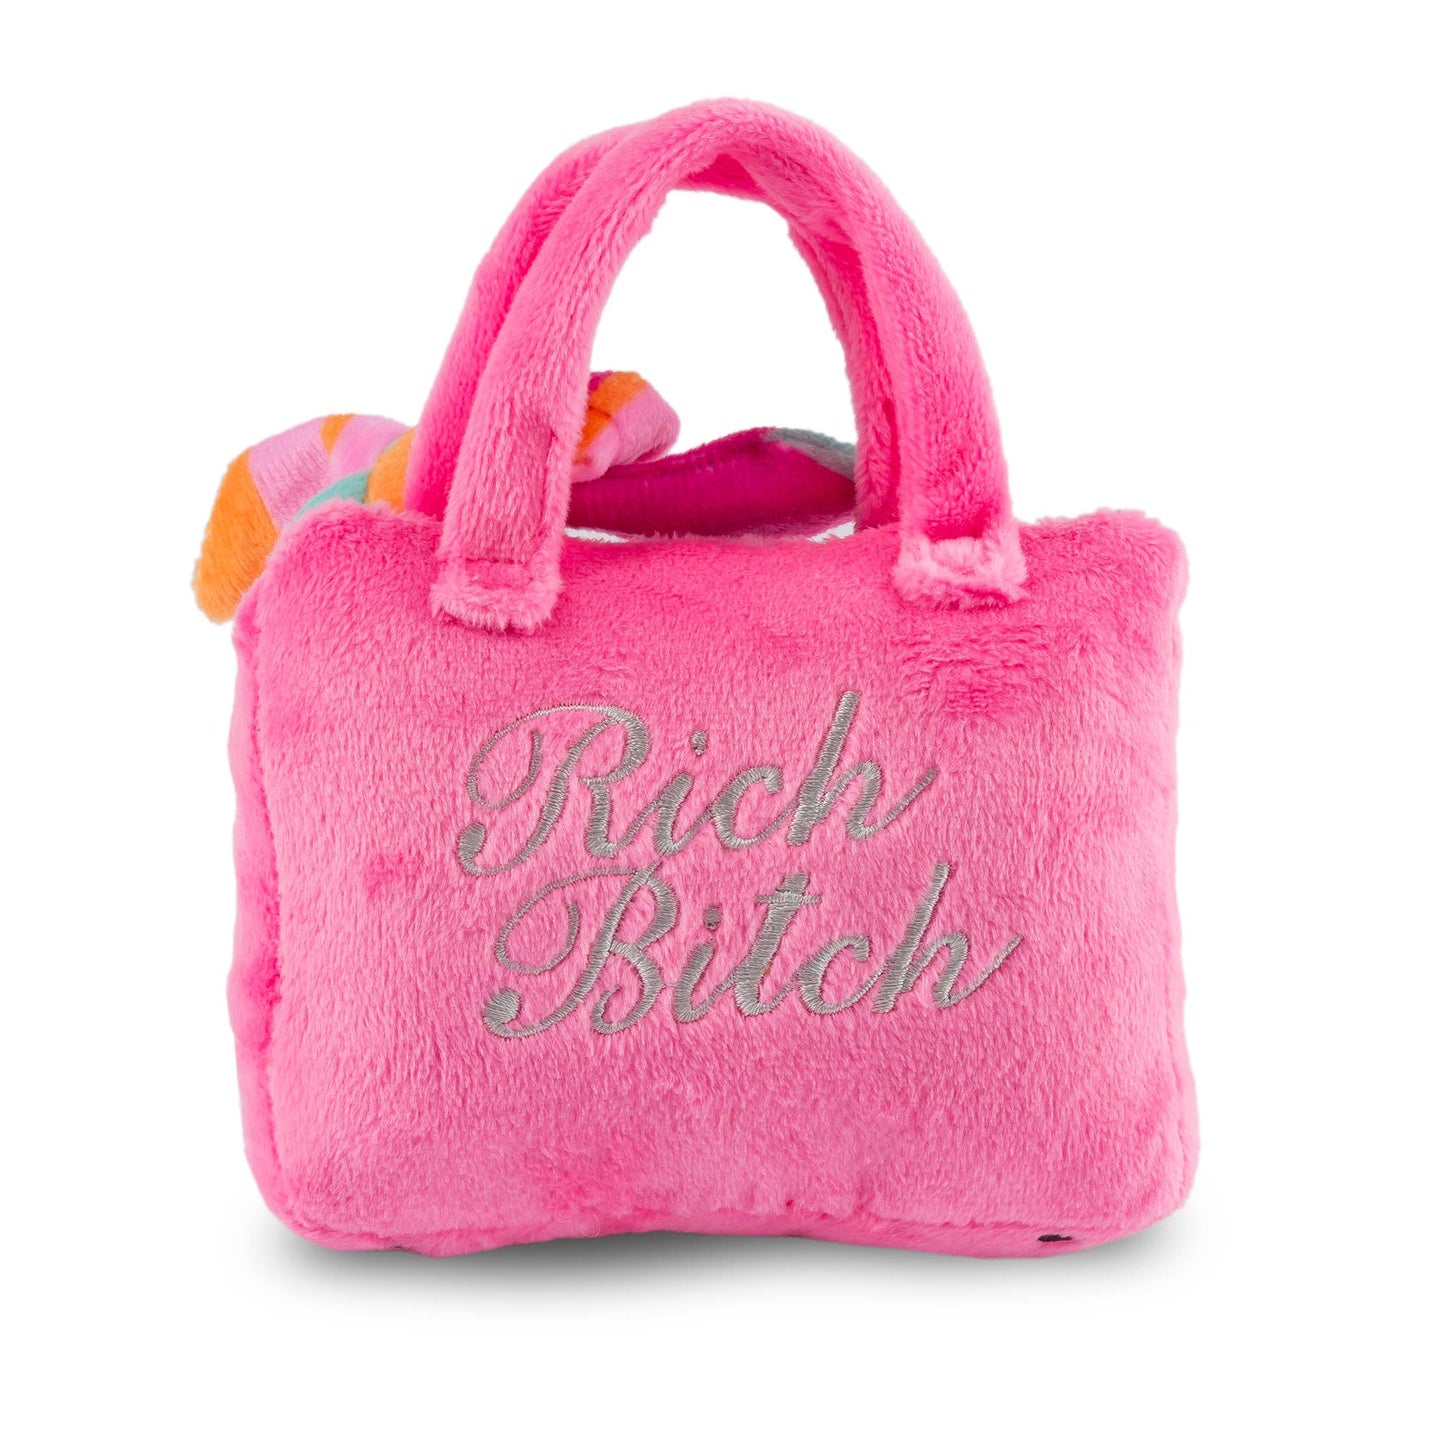 Haute Diggity Dog - Barkin Bag -  *RICH BITCH* Pink w/ Scarf - SMALL SIZE - Dog  Image